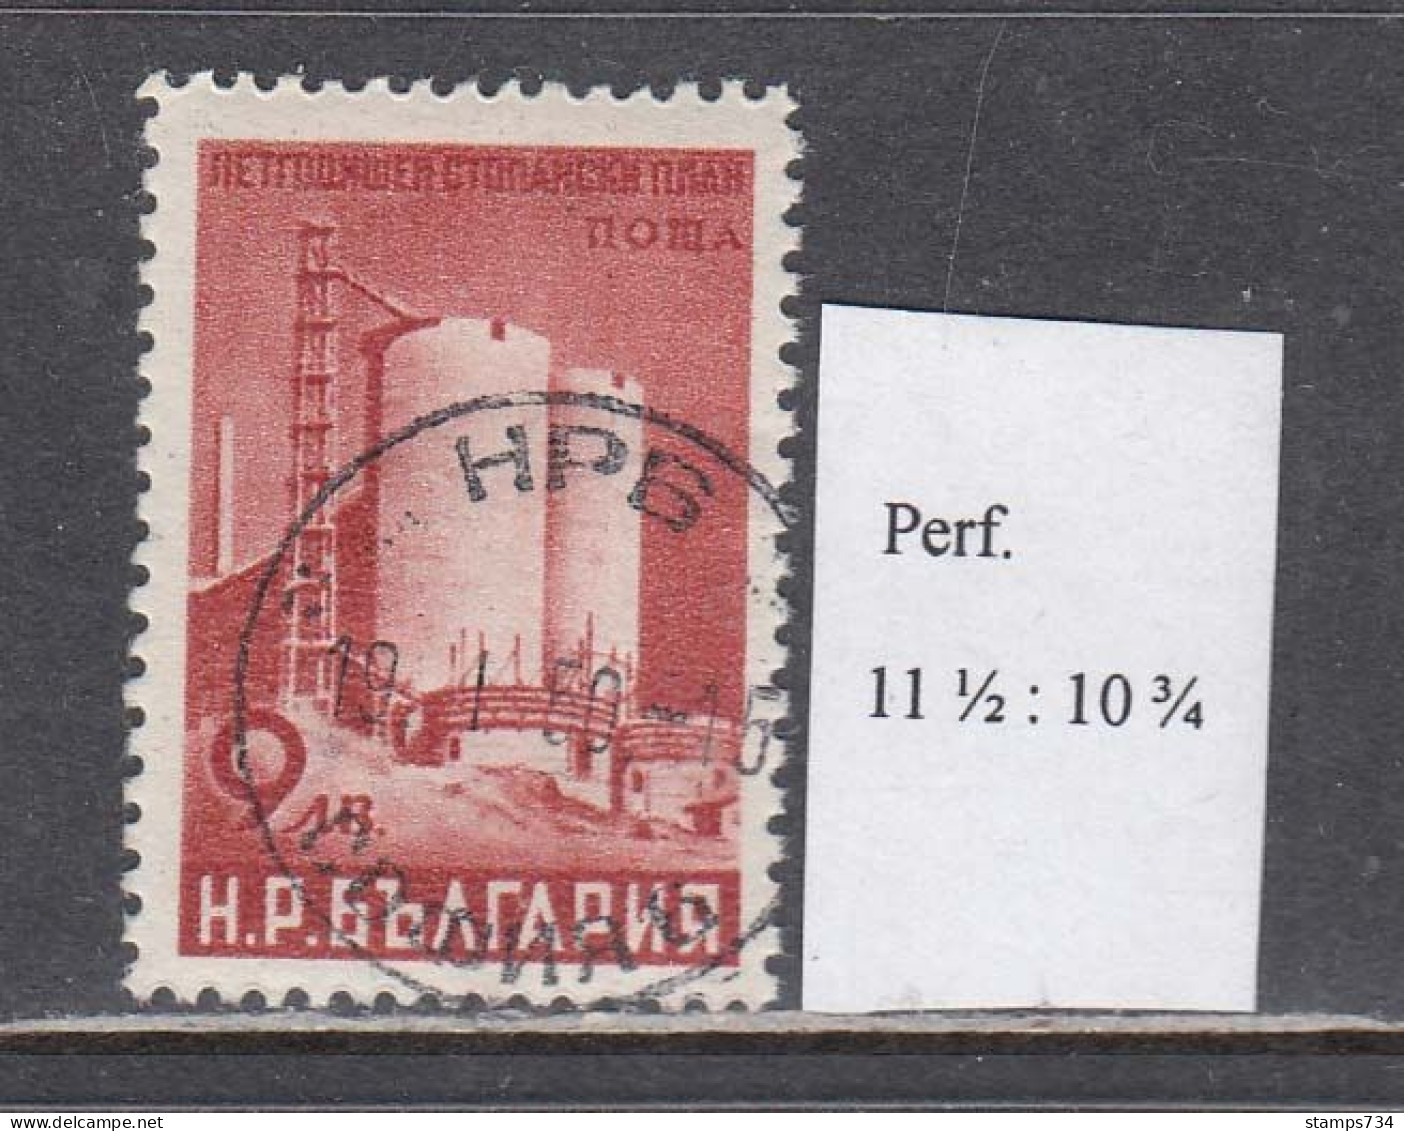 Bulgaria 1949 - Five-year Plan Of The Economy, Mi-Nr. 700, Rare Preforation 11 1/2: 10 3/4, Used - Oblitérés